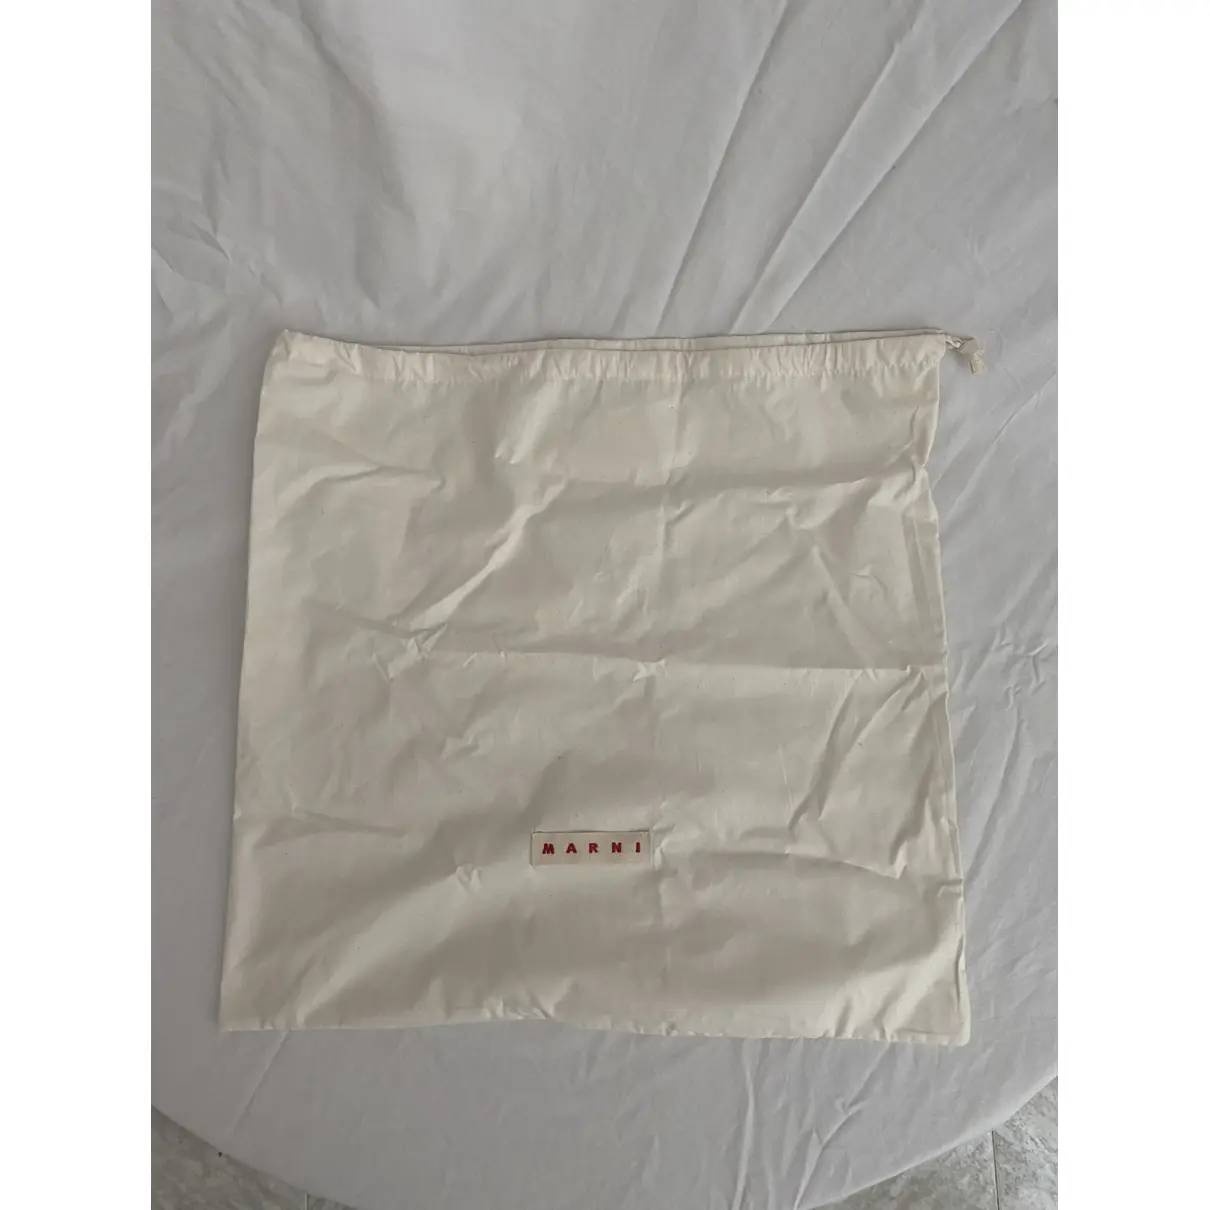 Buy Marni Trunk leather crossbody bag online